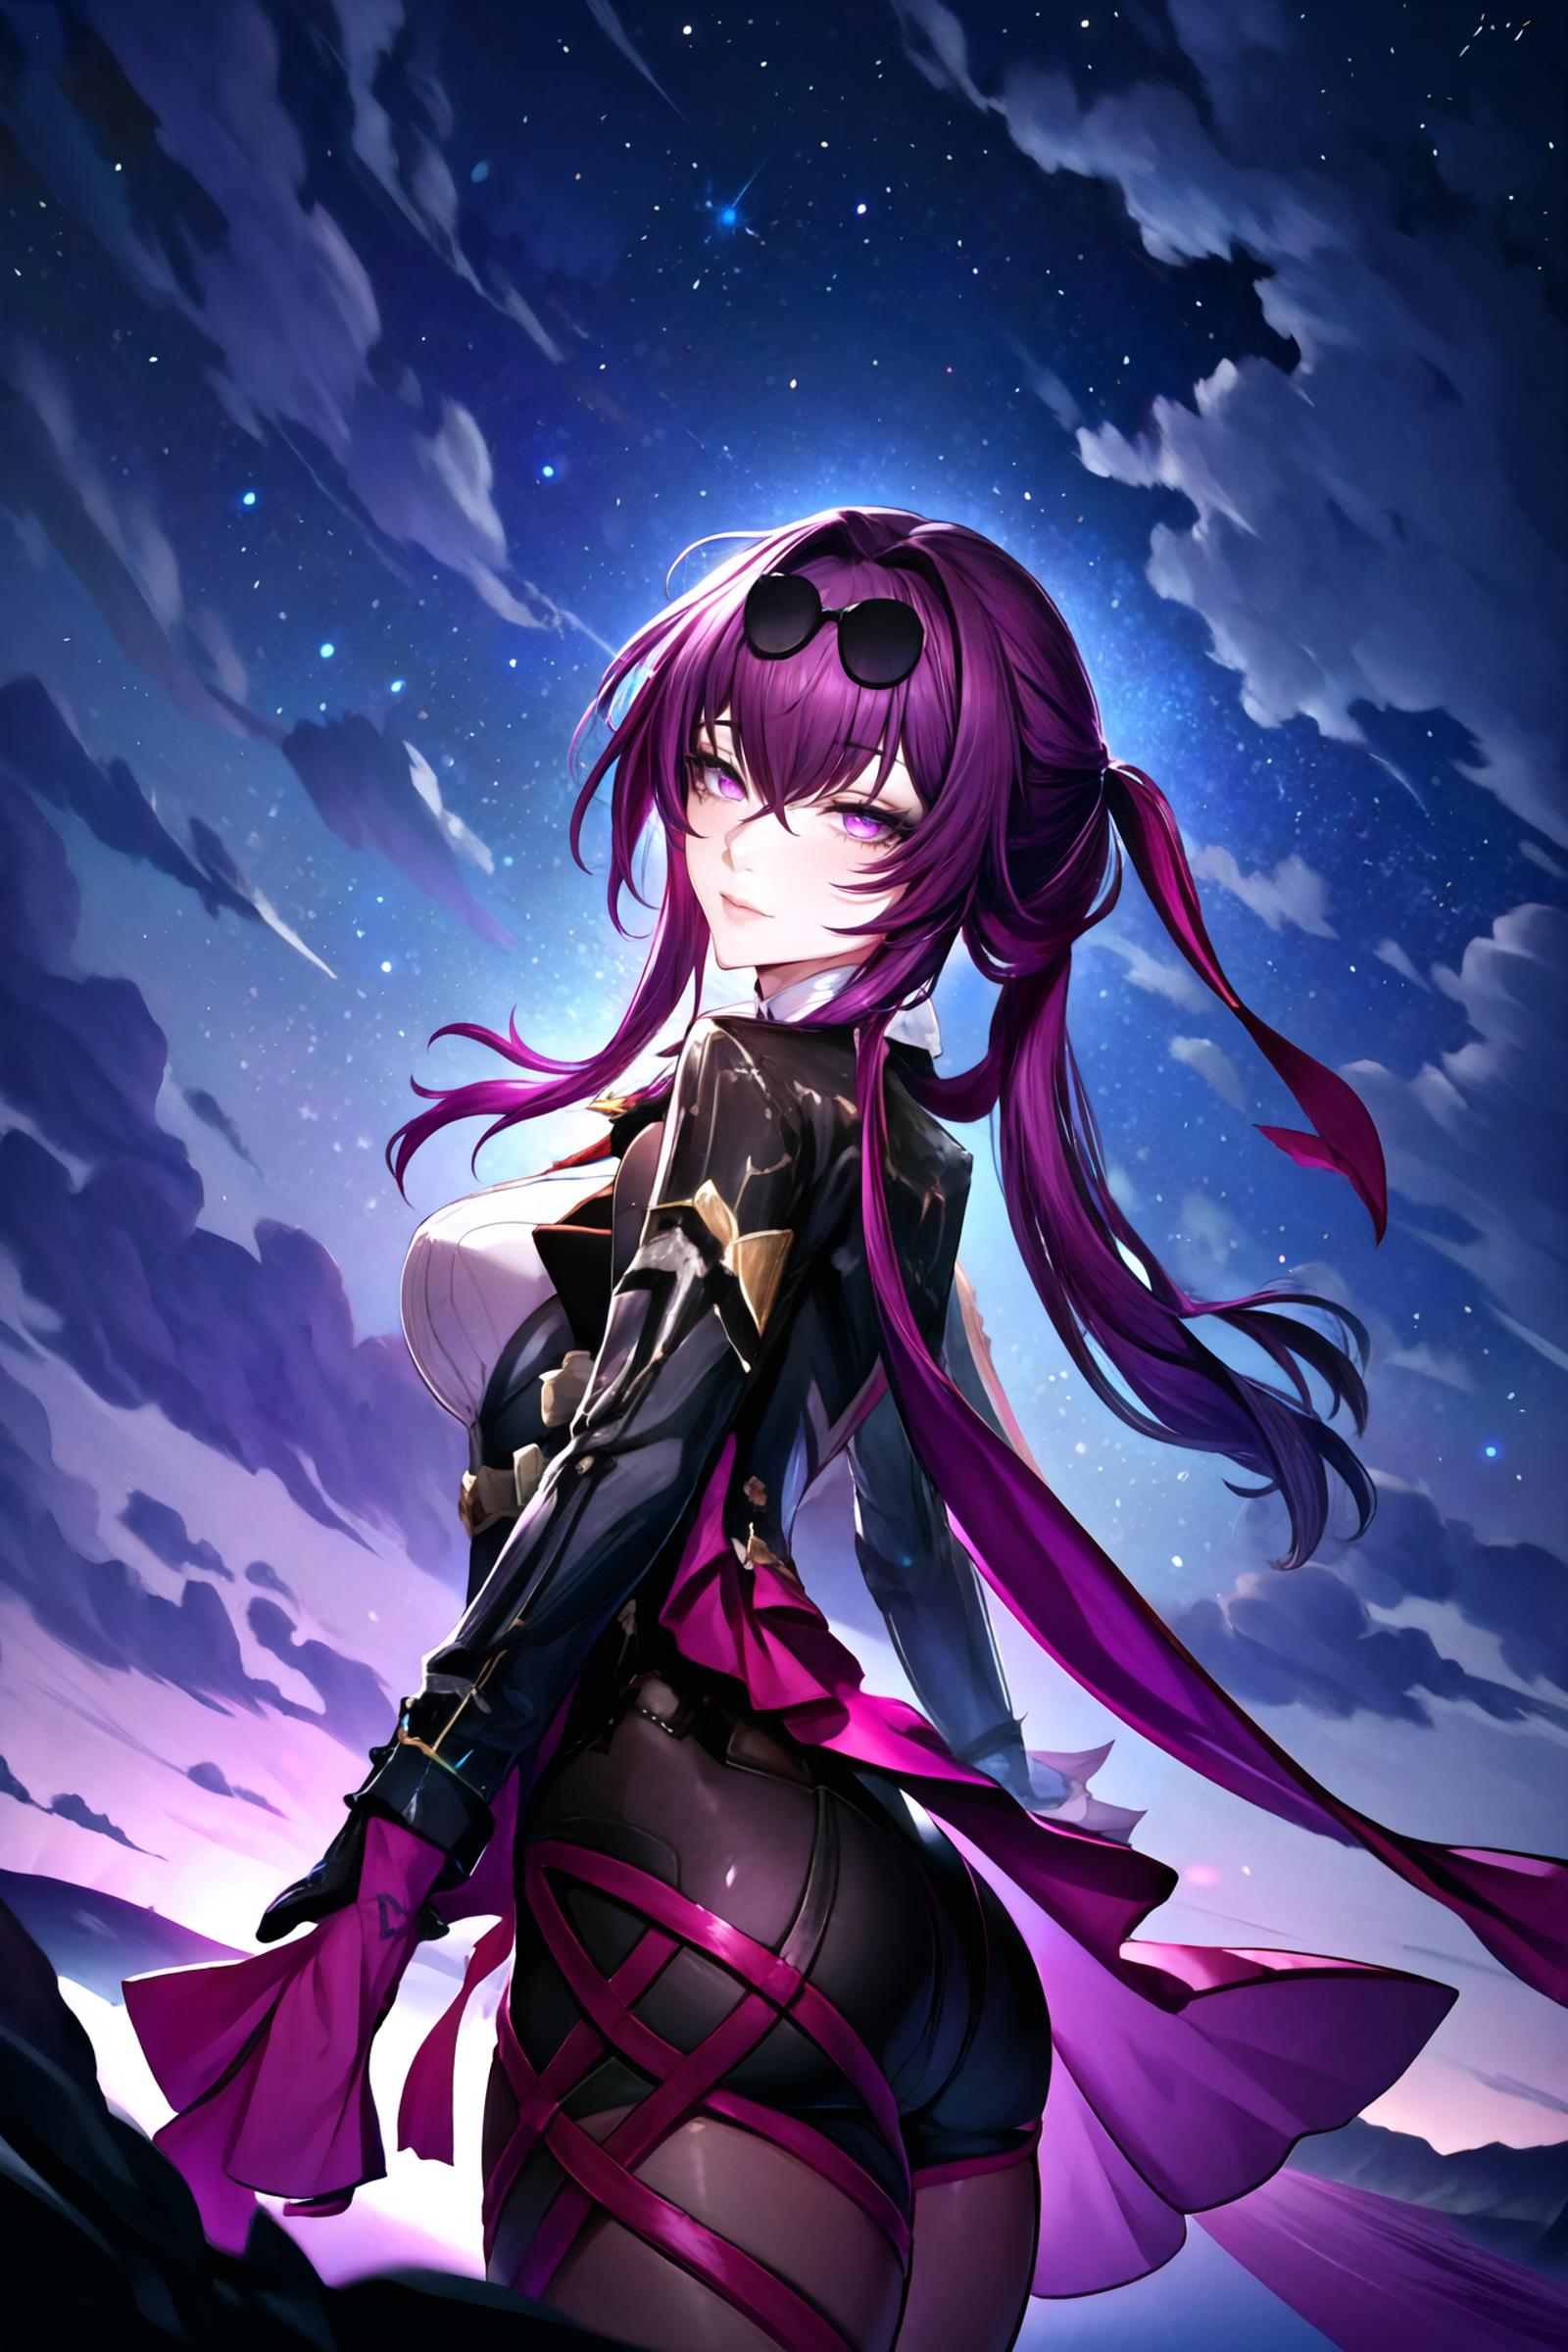 Anime girl in black dress and purple hair.